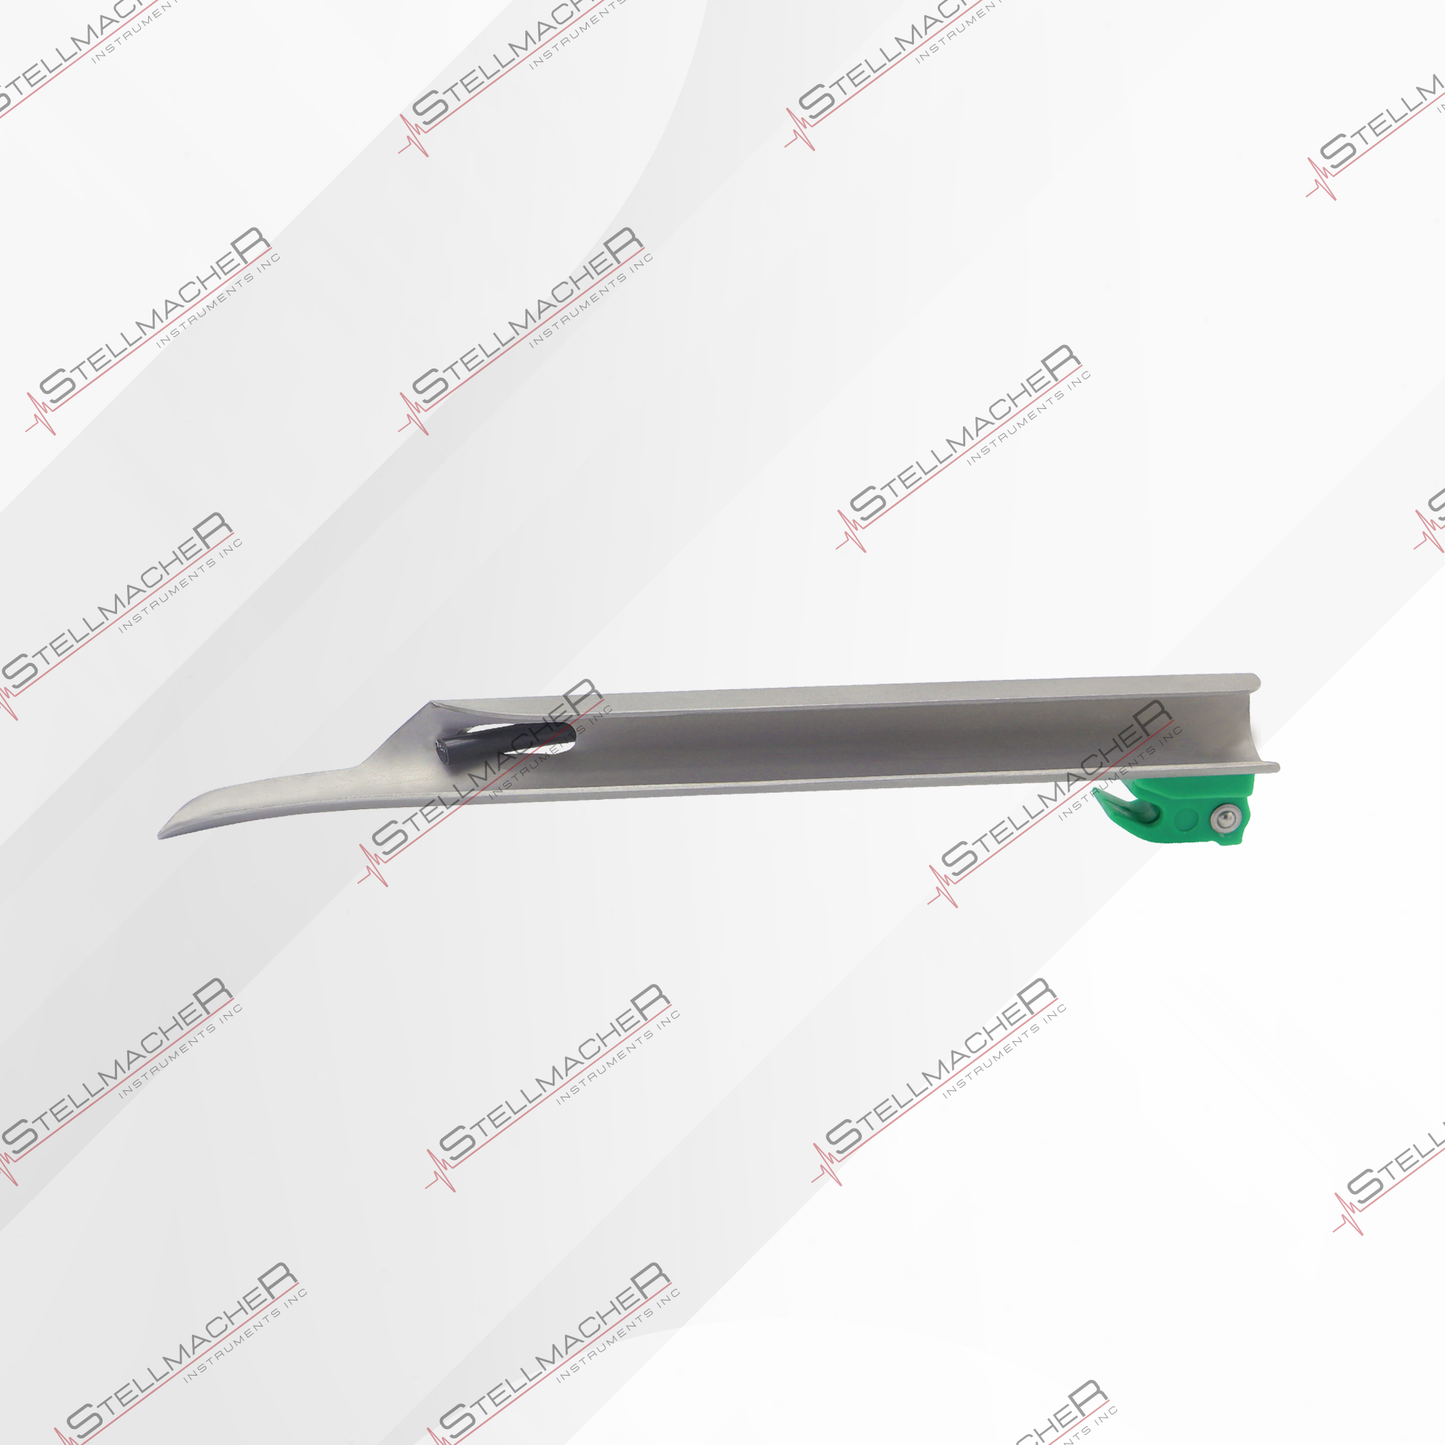 Single Use Laryngoscope Blades Miller Blades – 20 Pcs Pack